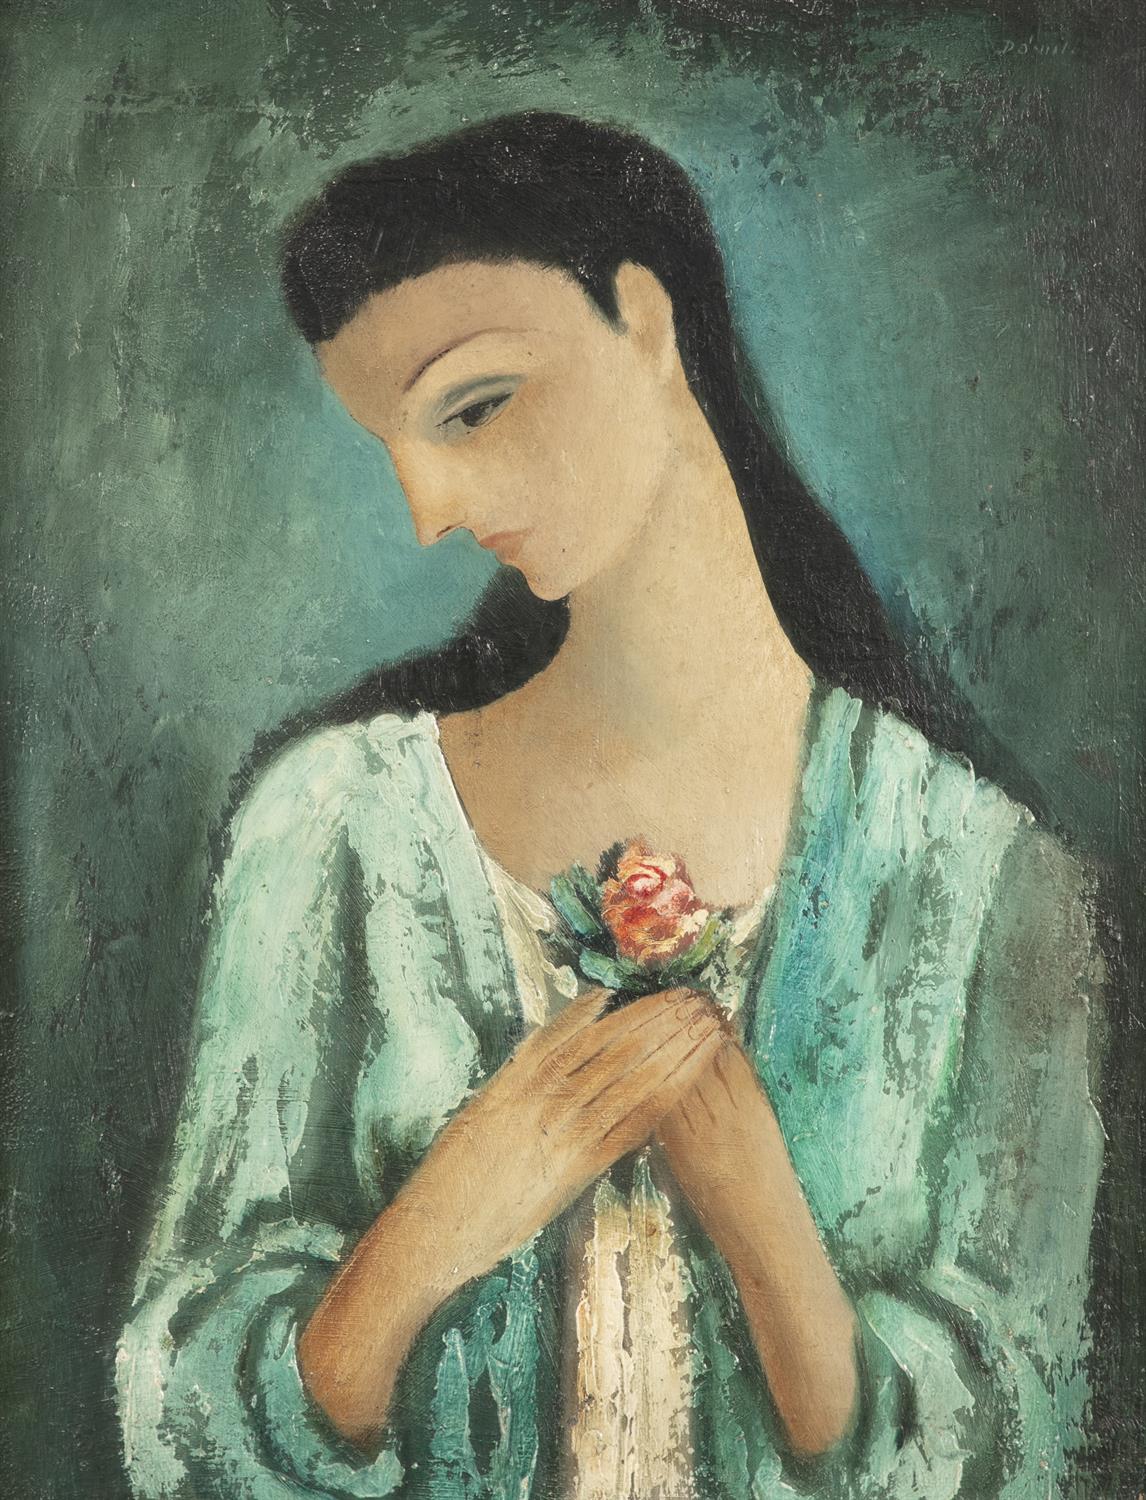 Daniel O'Neill (1920-1974) Girl with a flower Oil on board, 50 x 40cm (19.6 x 15.